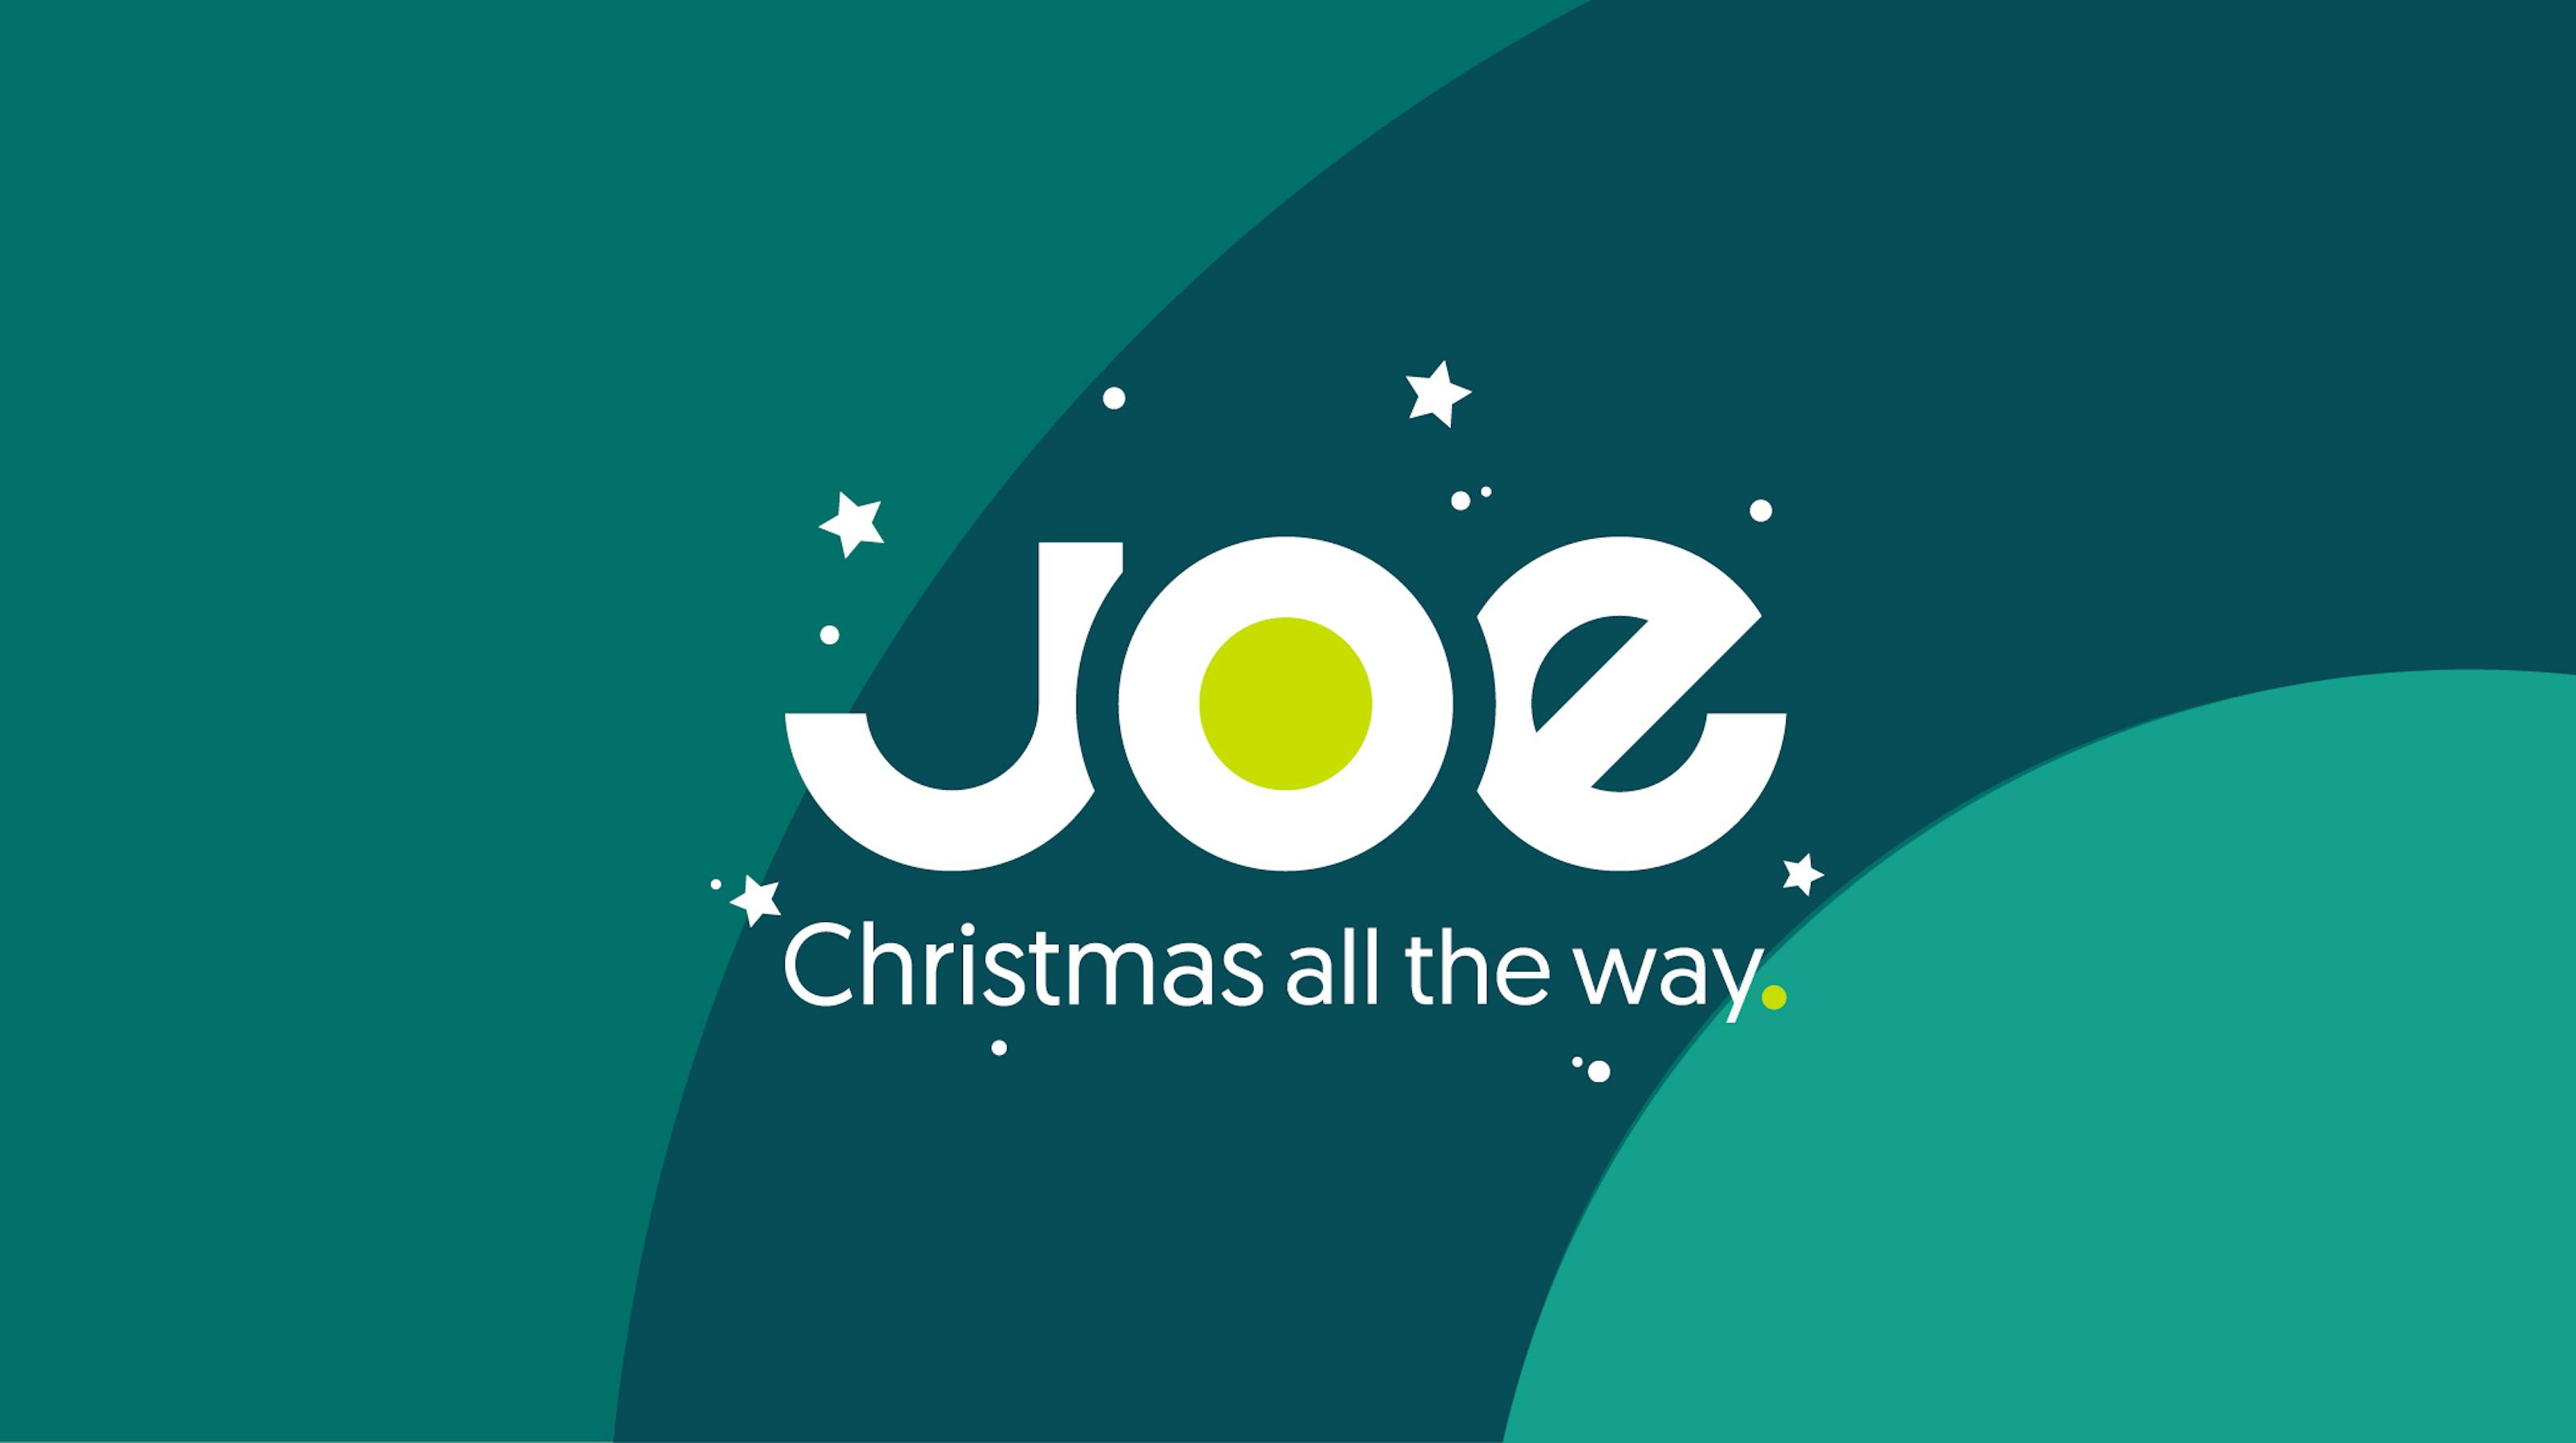 Joe - Christmas